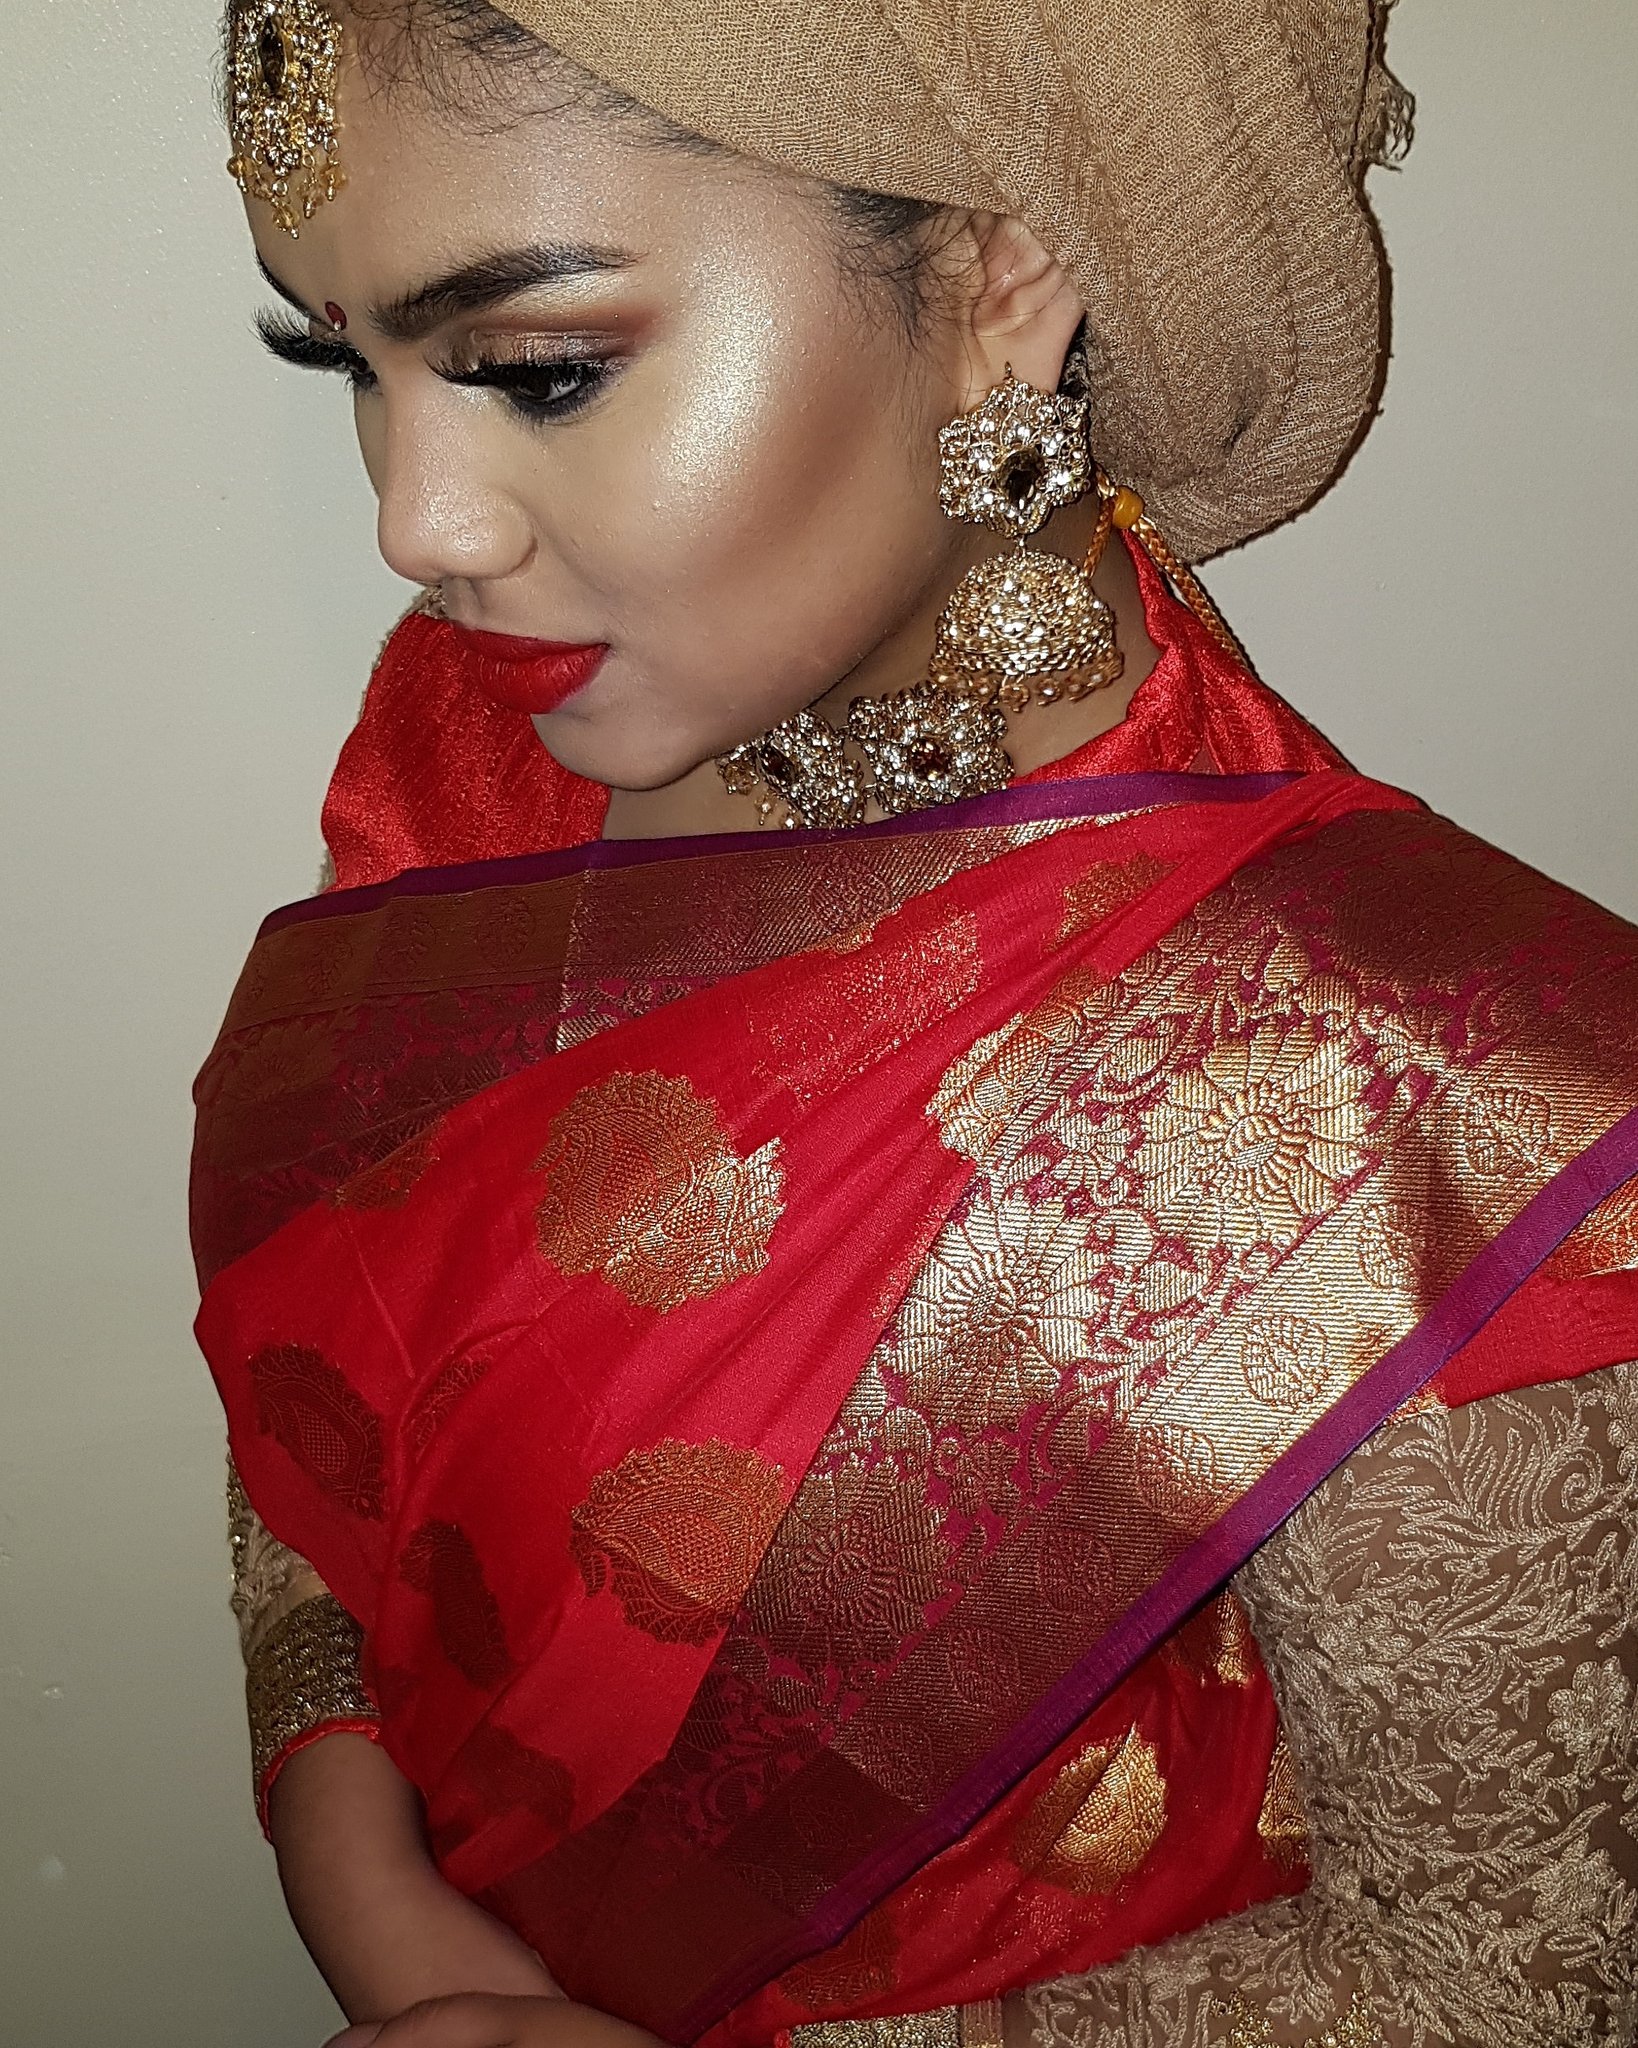 banarasi saree styling Archives - Cherry on Top | Beauty & Lifestyle